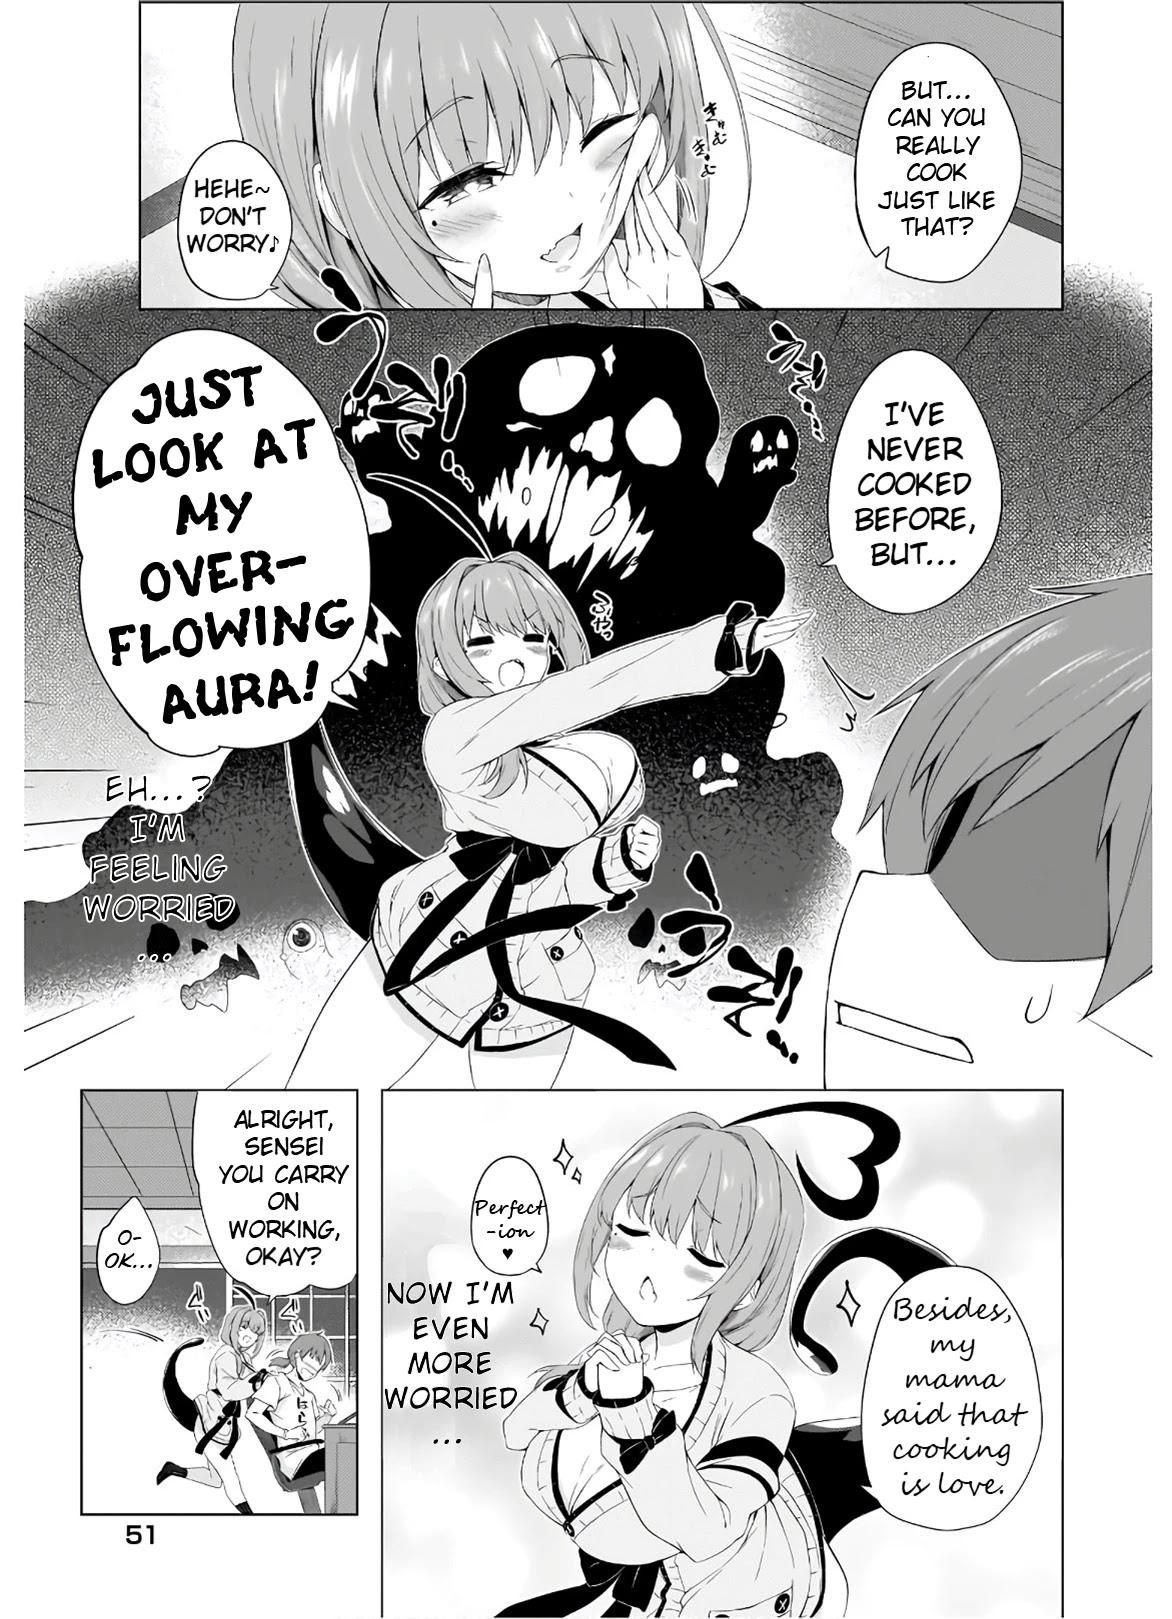 Gahi-Chan! - Page 1